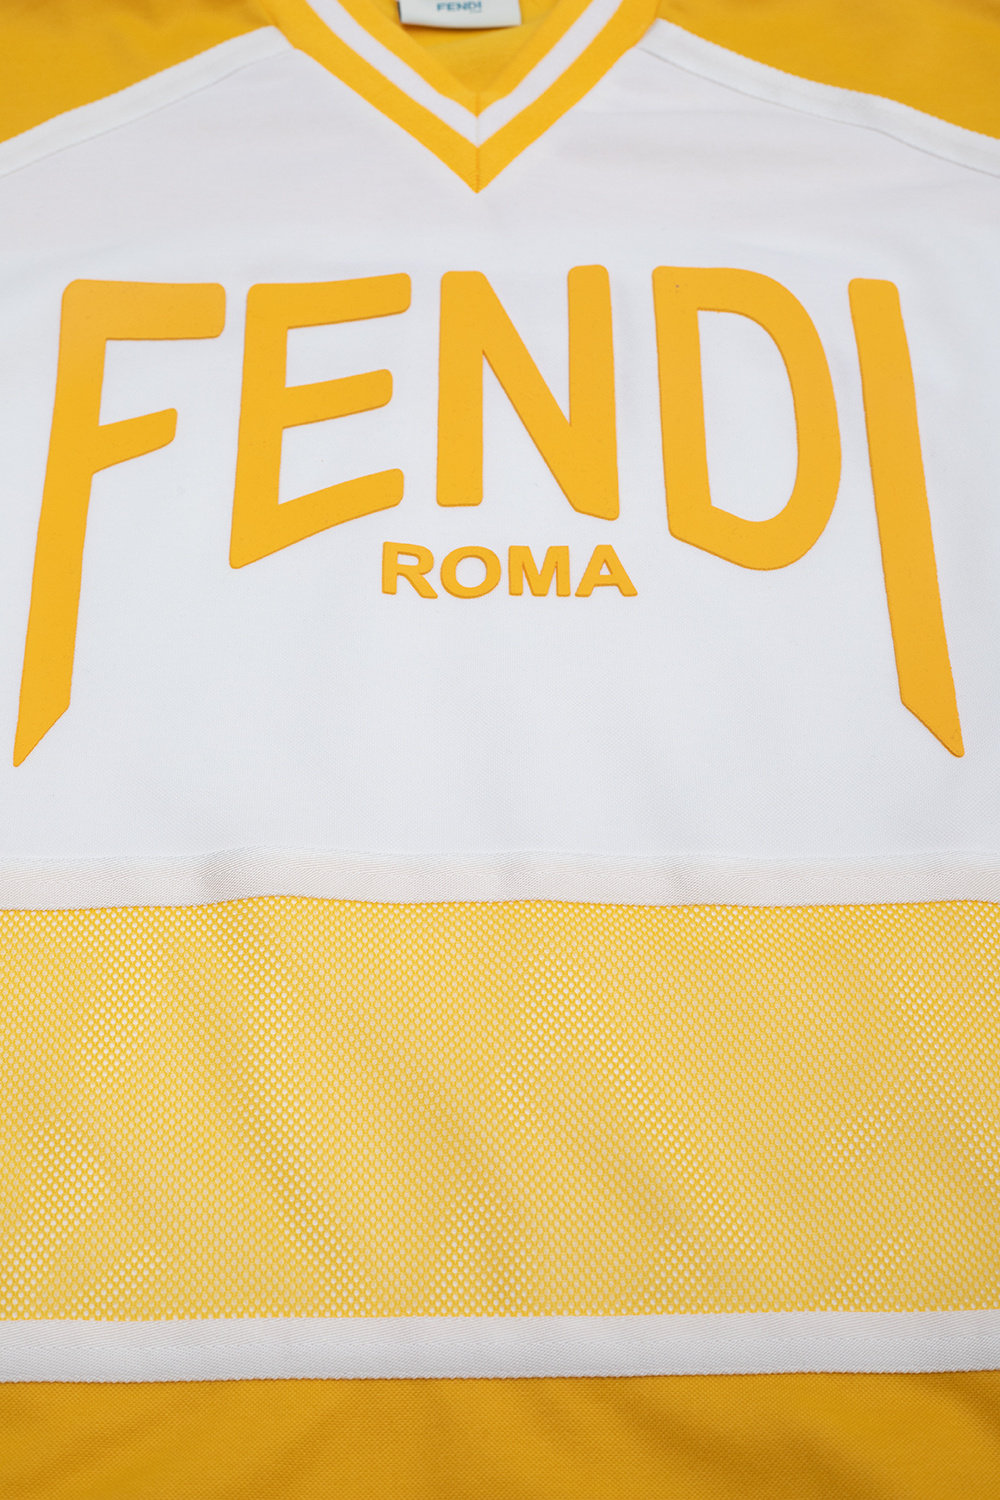 Fendi Kids T-shirt with logo